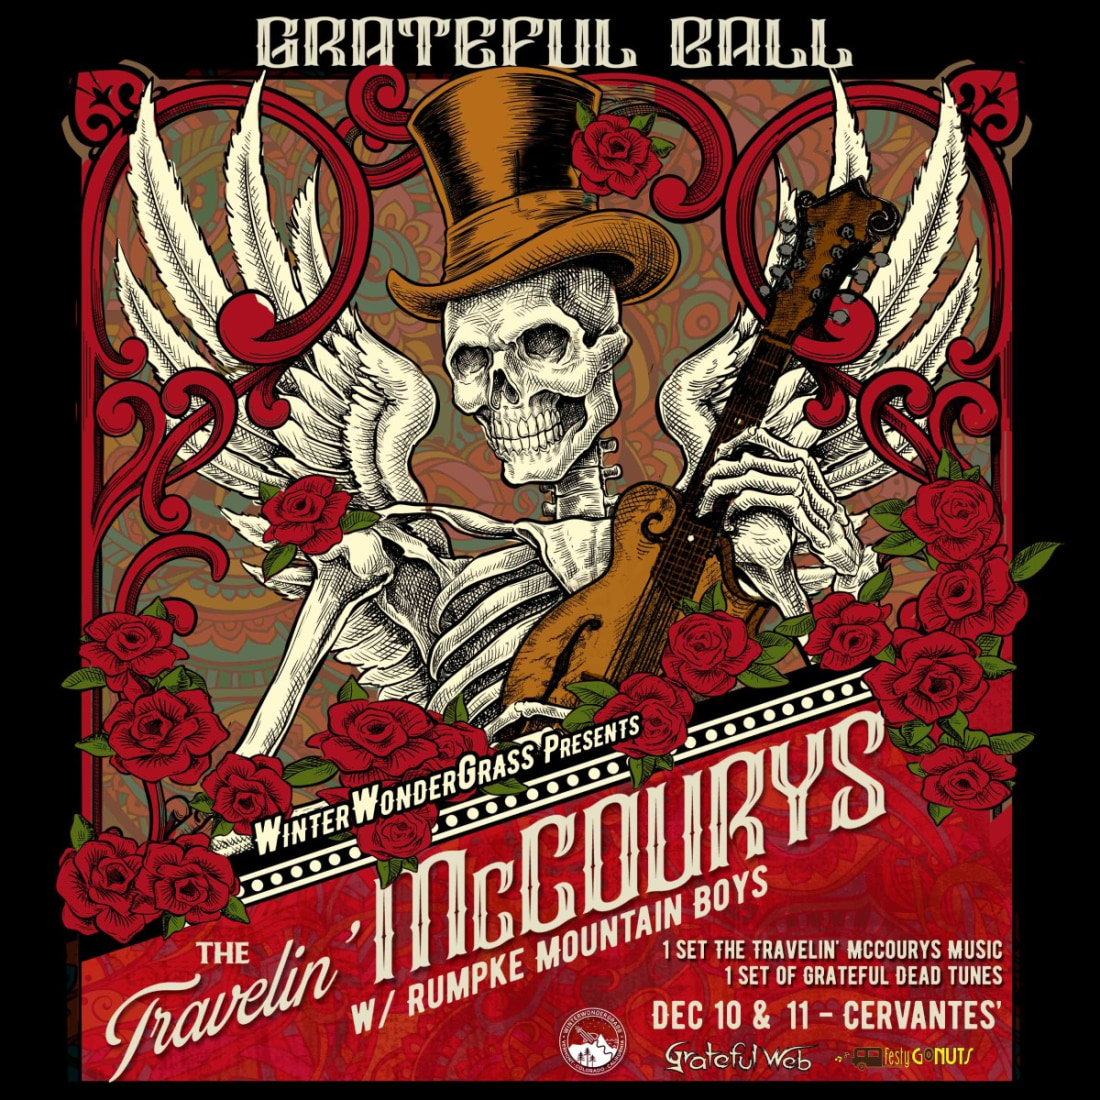 The Grateful Ball ft. The Travelin' McCourys w/ Rumpke Mountain Boys - Presented by WinterWonderGrass *SAT, 12/11*